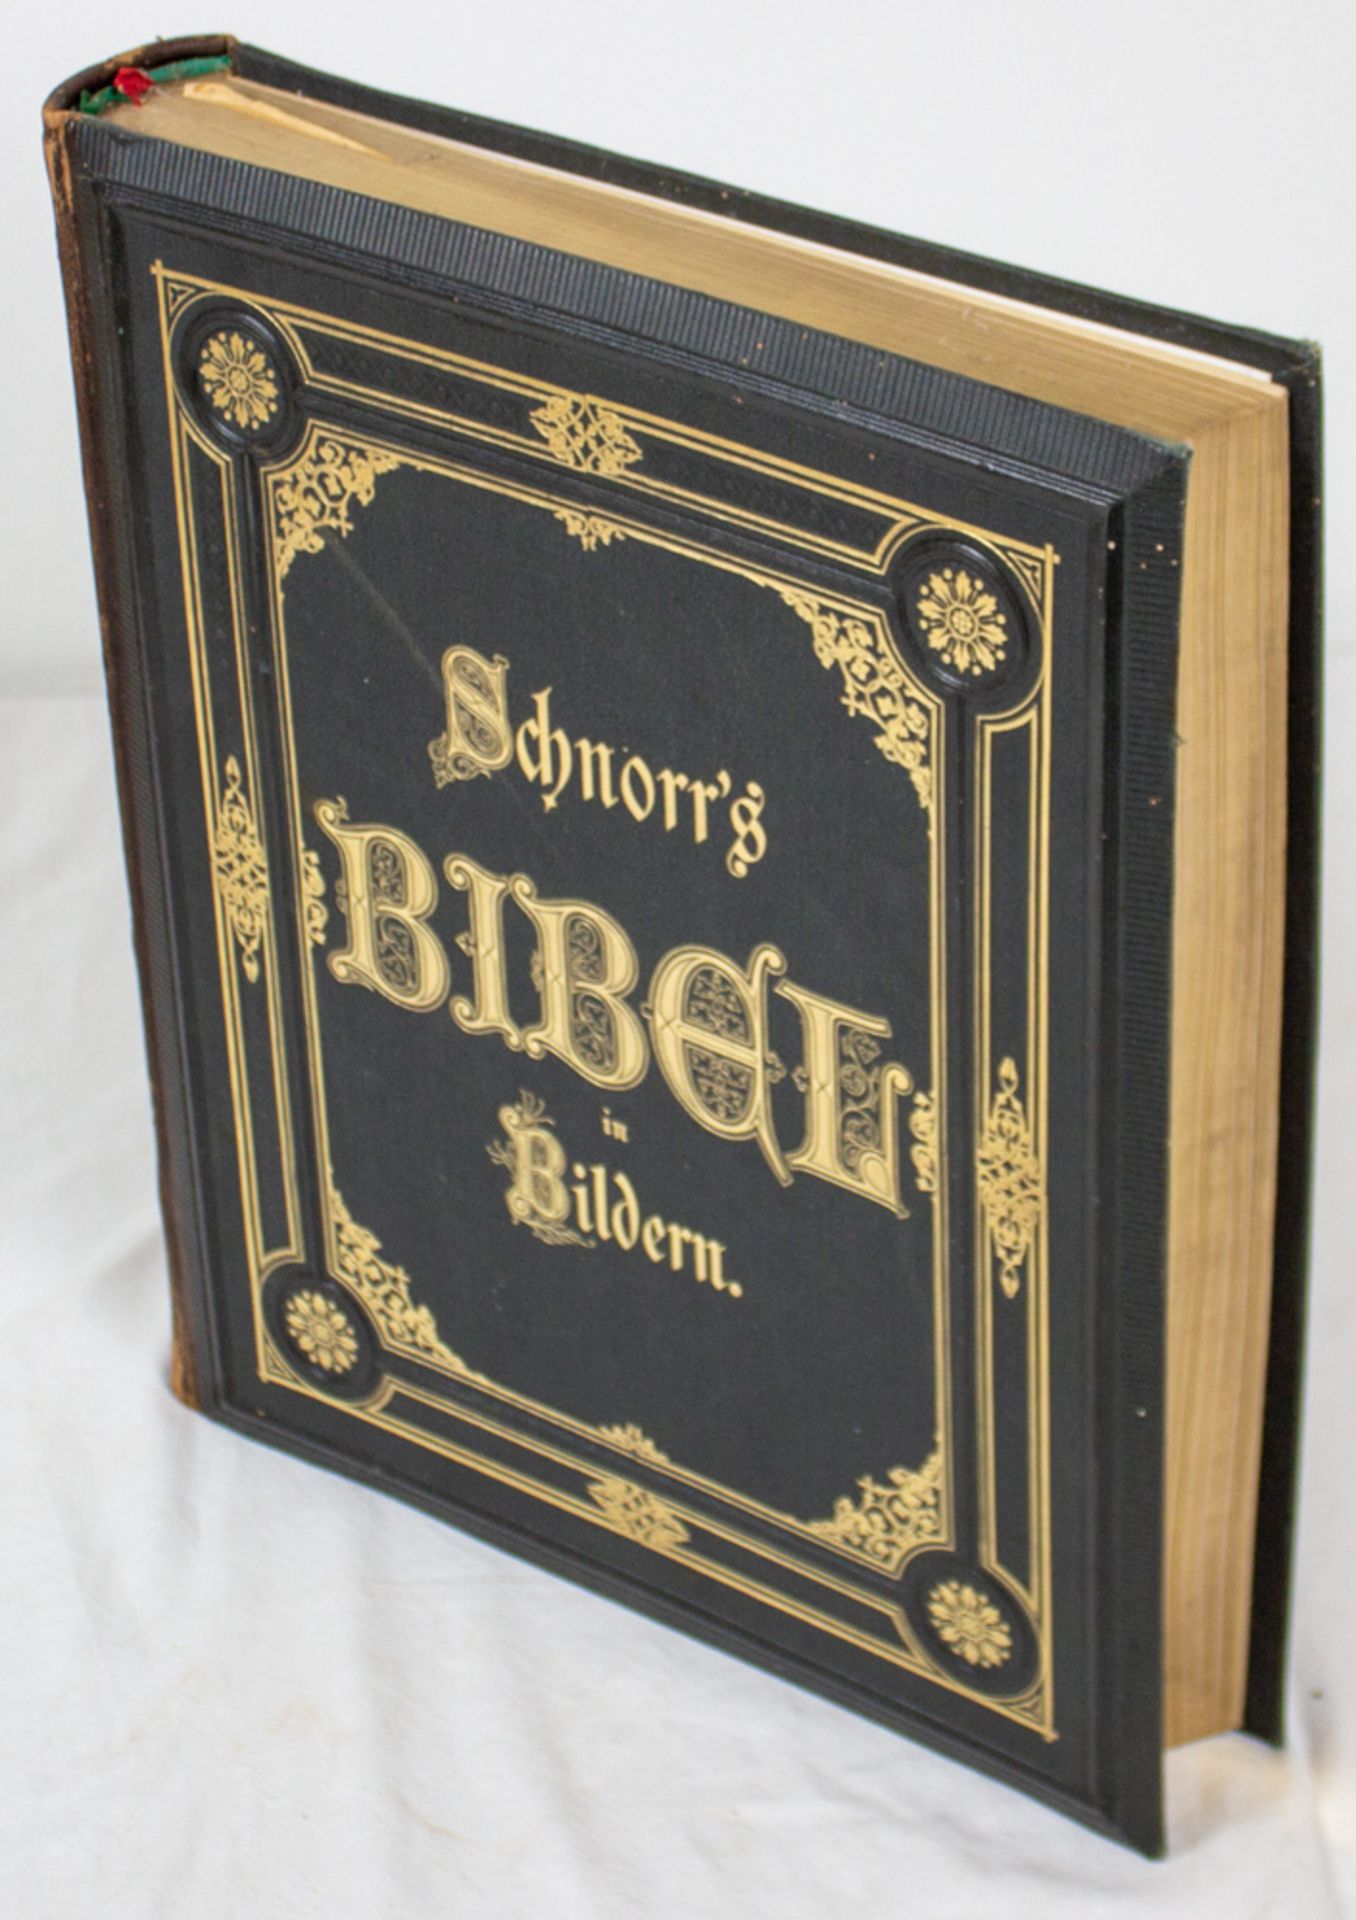 Schnorr's Bibel in Bildern, Volks- und Kinderbibel, Leipzig, 19. Jh. - Image 5 of 6